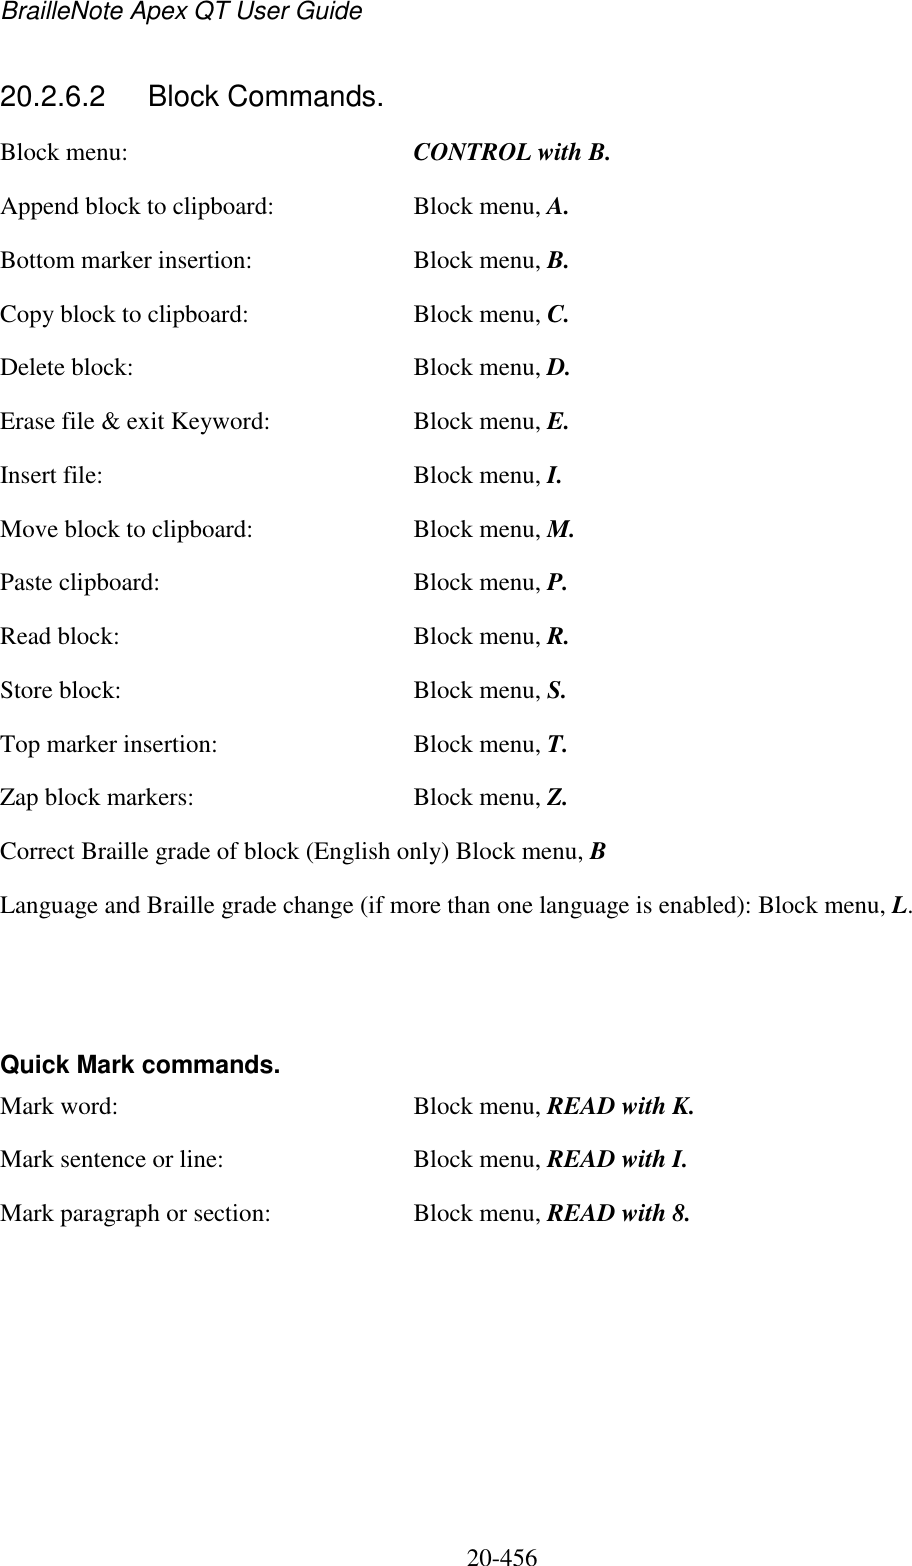 BrailleNote Apex QT User Guide  20-456   20.2.6.2  Block Commands. Block menu:  CONTROL with B. Append block to clipboard:  Block menu, A. Bottom marker insertion:  Block menu, B. Copy block to clipboard:  Block menu, C. Delete block:  Block menu, D. Erase file &amp; exit Keyword:  Block menu, E. Insert file:  Block menu, I. Move block to clipboard:  Block menu, M. Paste clipboard:  Block menu, P. Read block:  Block menu, R. Store block:  Block menu, S. Top marker insertion:  Block menu, T. Zap block markers:  Block menu, Z. Correct Braille grade of block (English only) Block menu, B Language and Braille grade change (if more than one language is enabled): Block menu, L.    Quick Mark commands. Mark word:  Block menu, READ with K. Mark sentence or line:  Block menu, READ with I. Mark paragraph or section:  Block menu, READ with 8.   